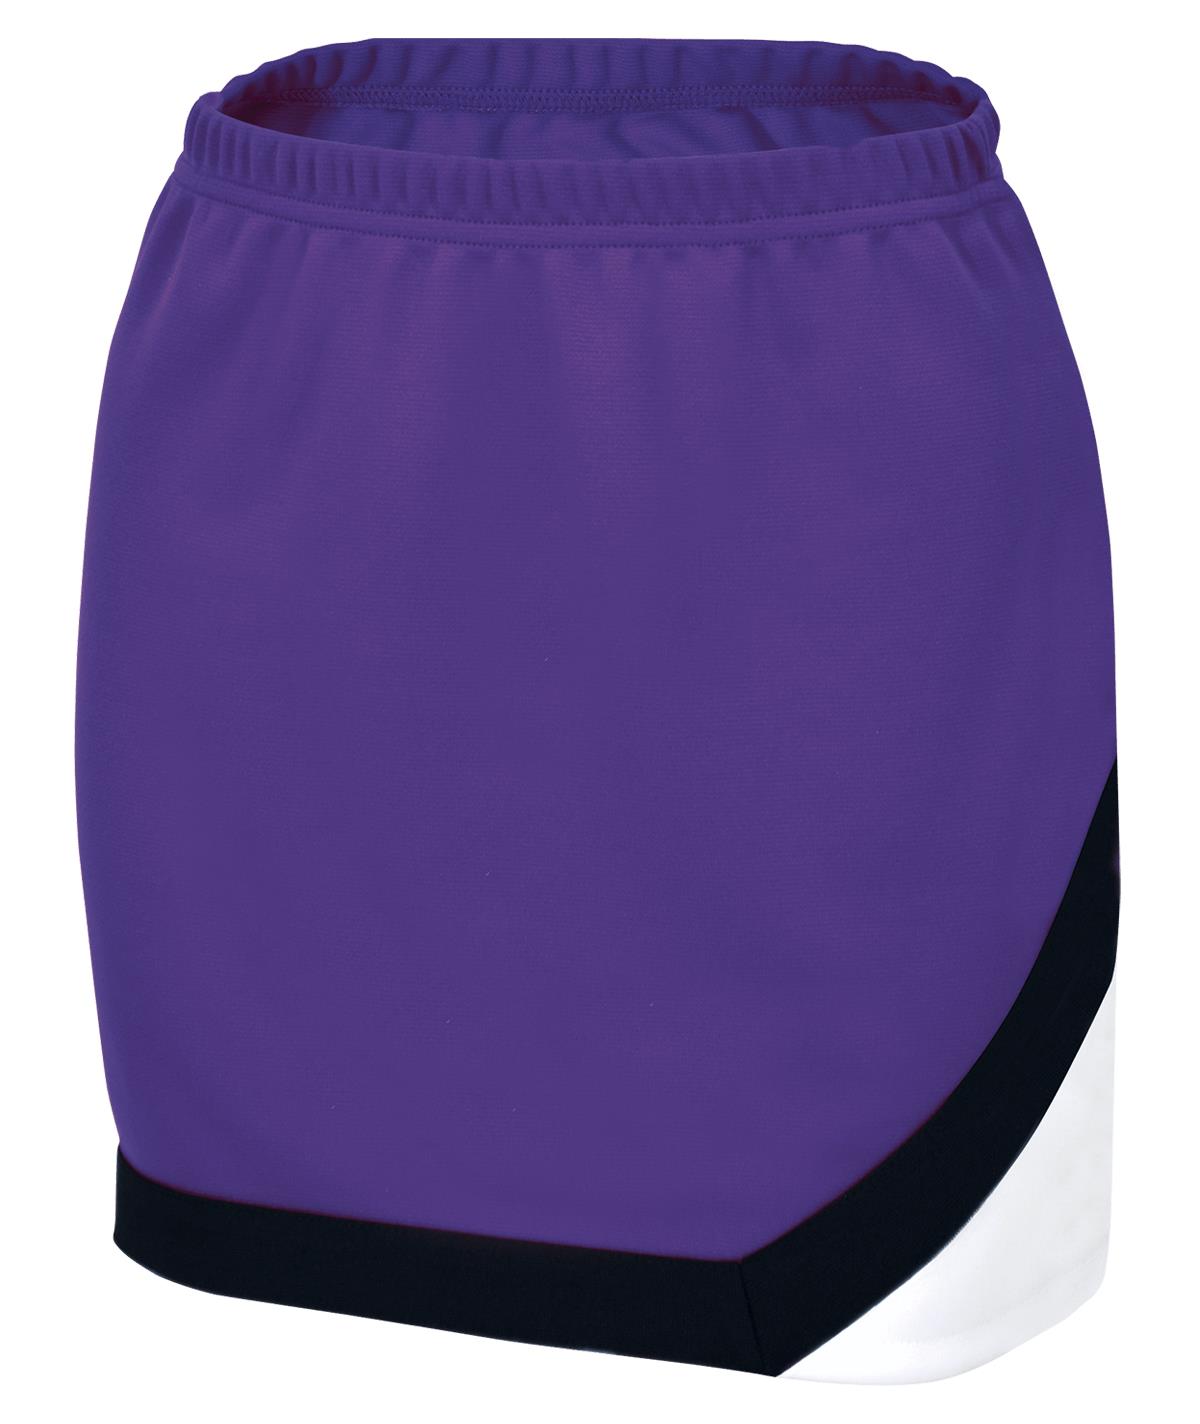 Chasse Sport Signature Skirt